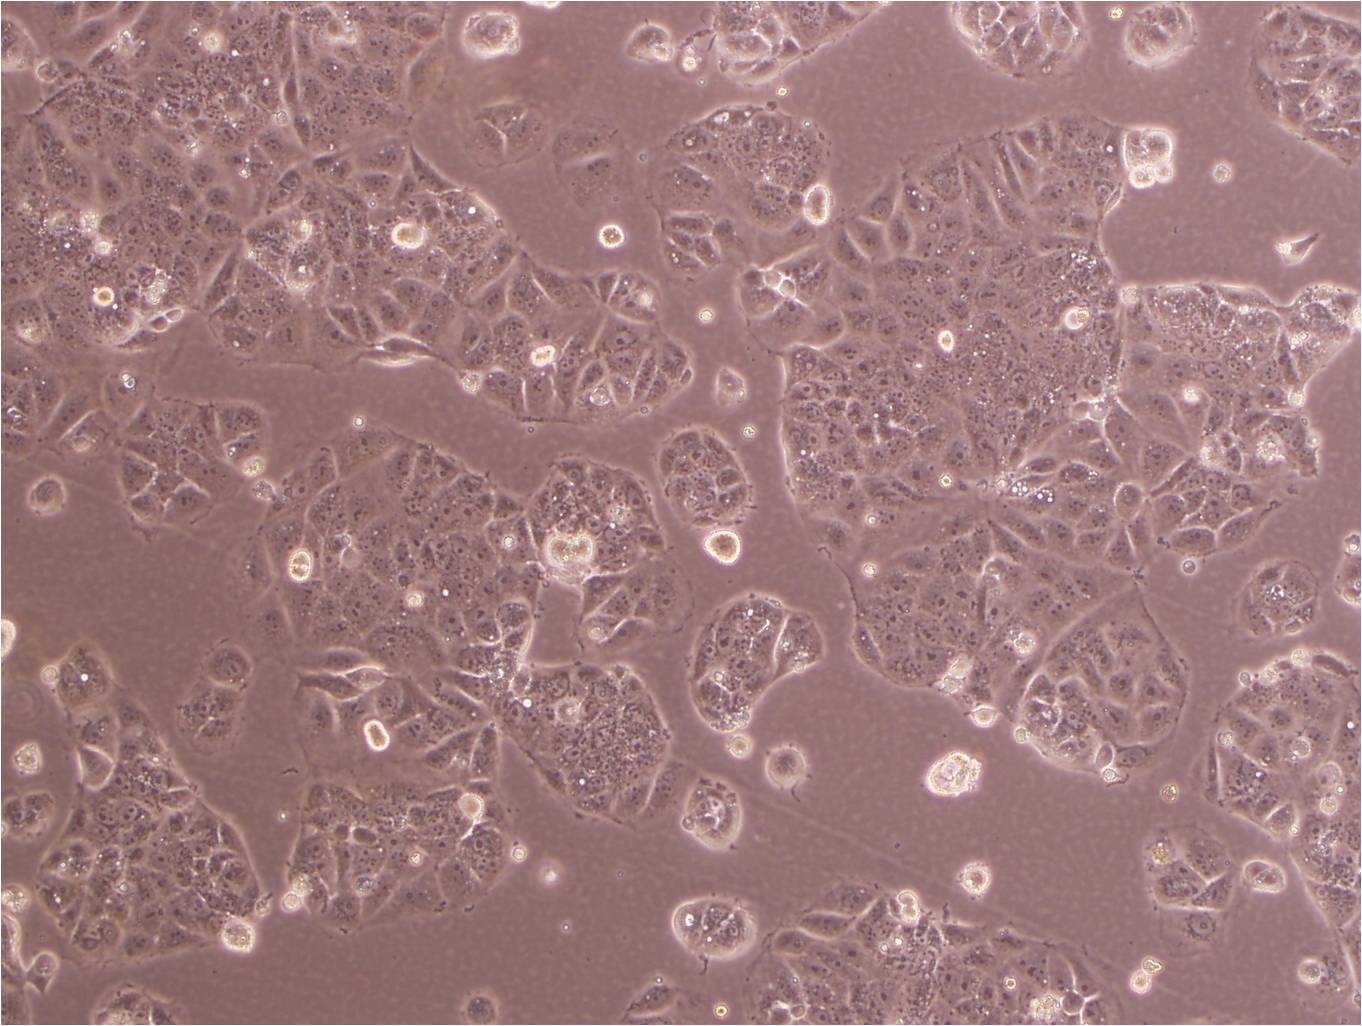 EFM-19 epithelioid cells人乳腺管癌细胞系,EFM-19 epithelioid cells